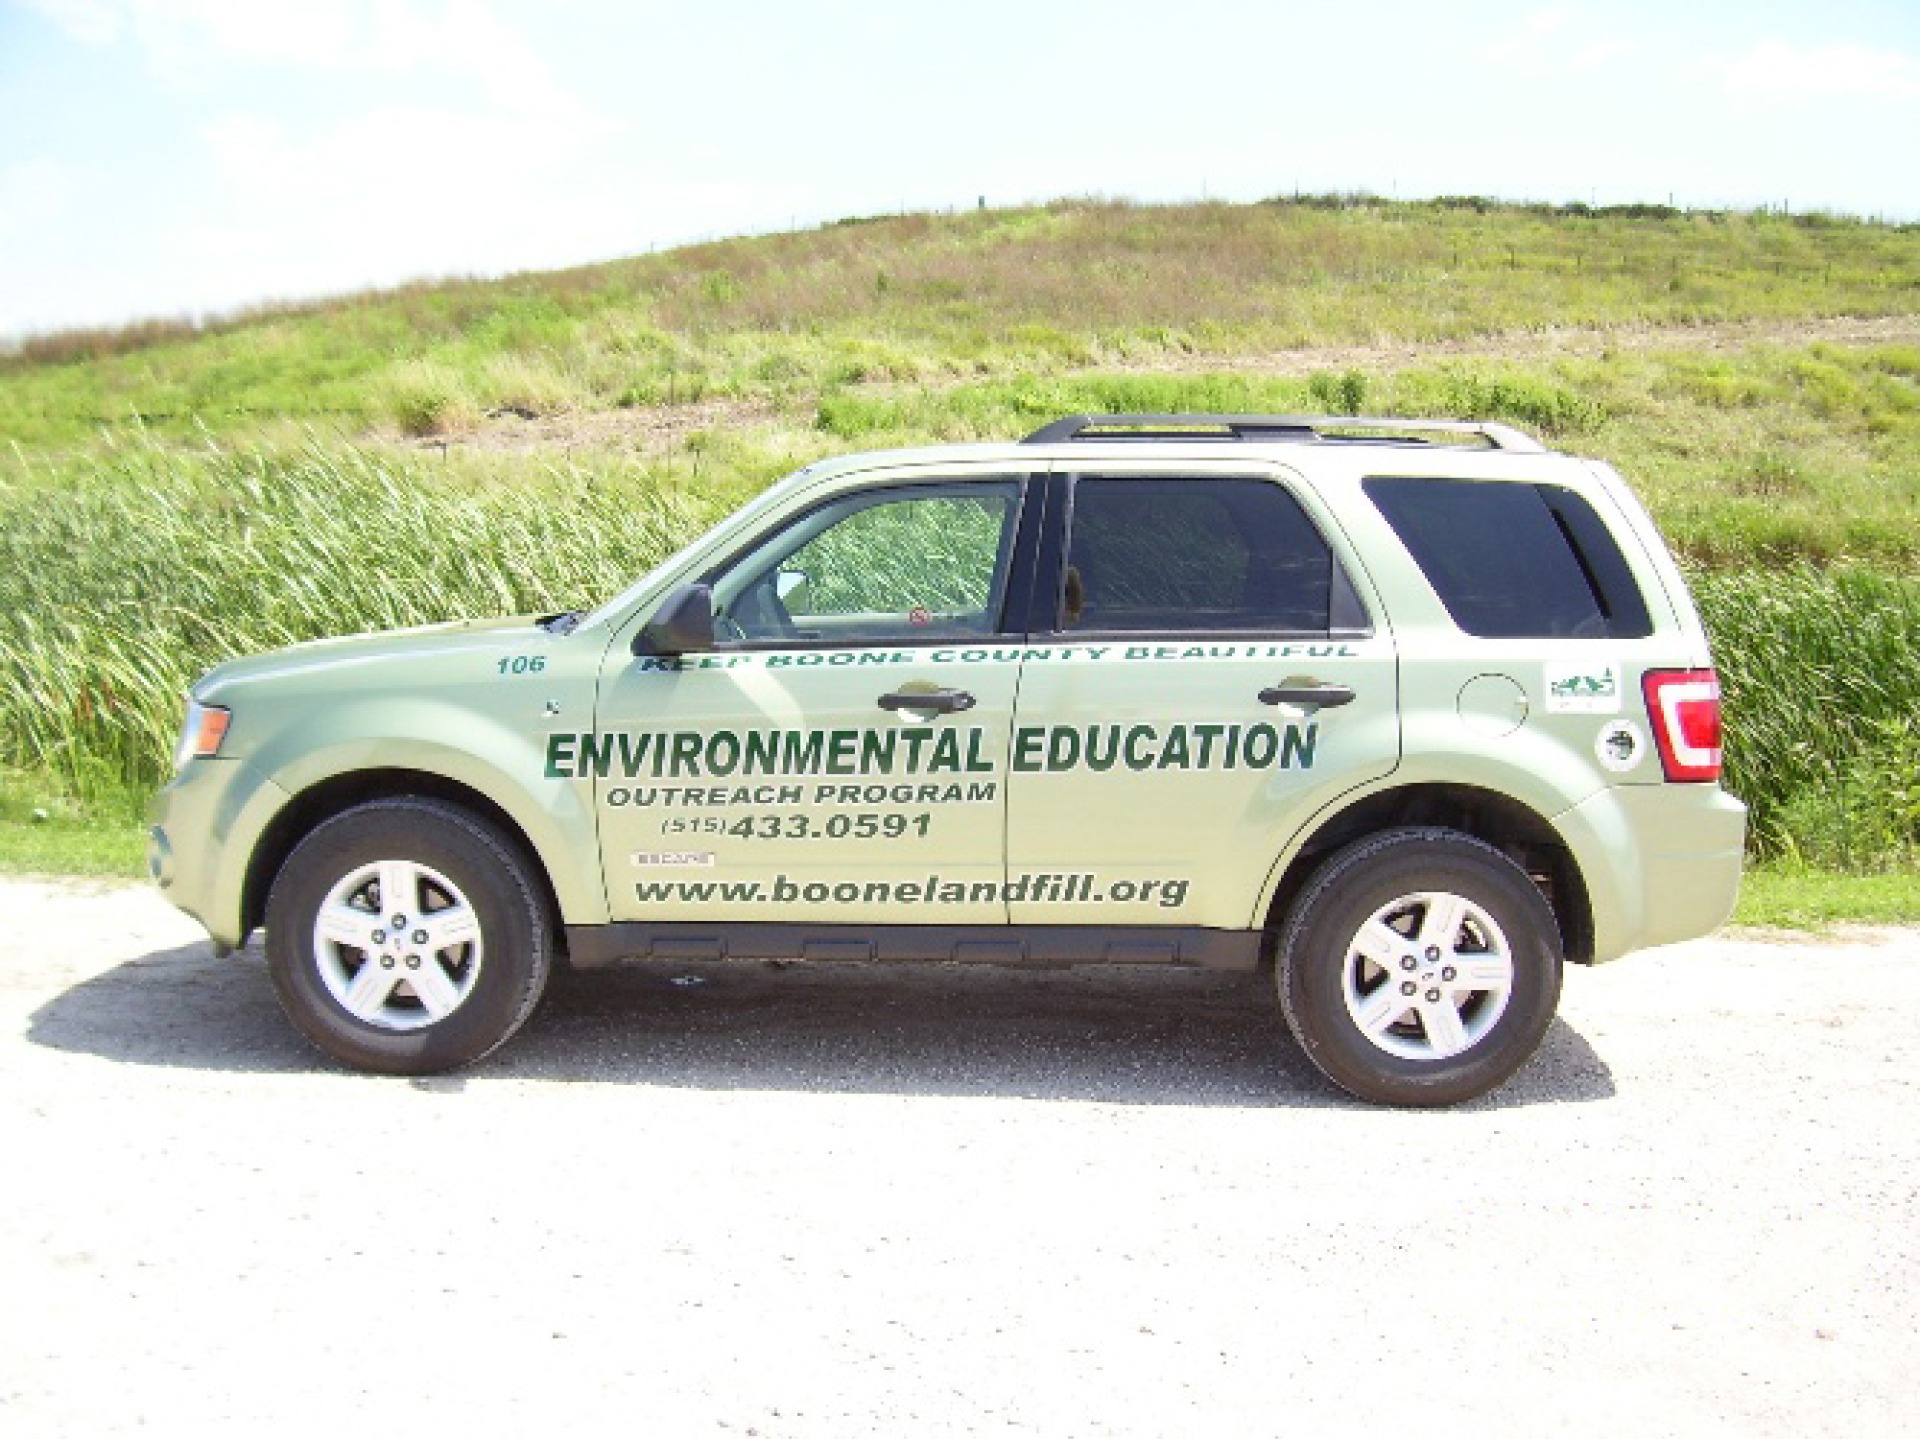 Boone County Landfill Environmental Education Outreach Program vehicle.